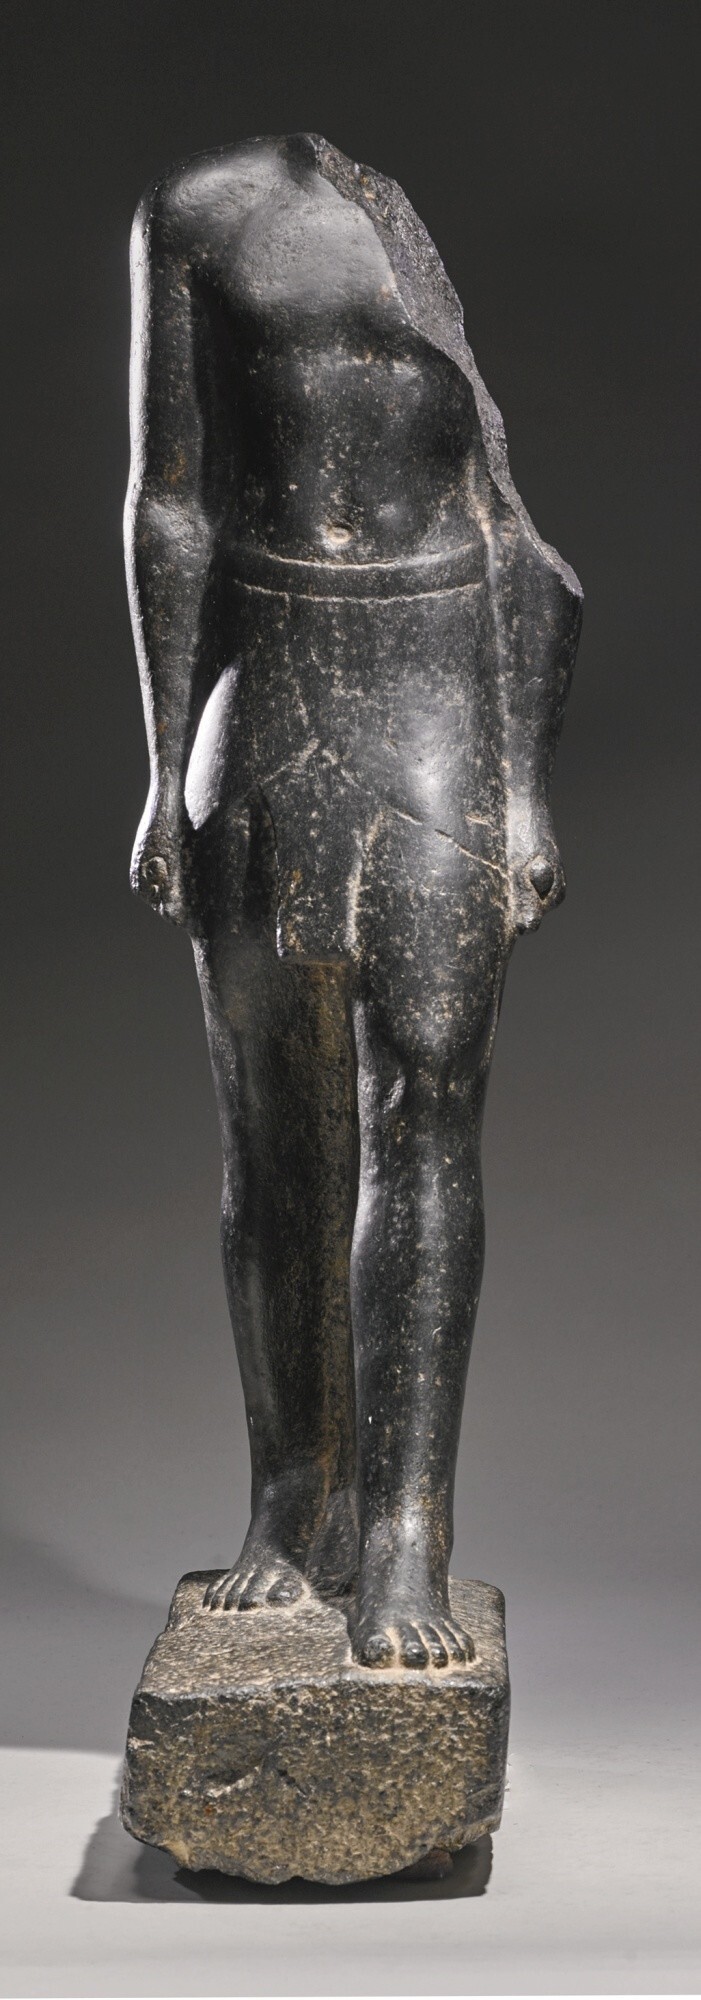 Базальтовая статуя, 30-я династия, 380-200 до Н.Э. Лот 80 000 -120 000 $